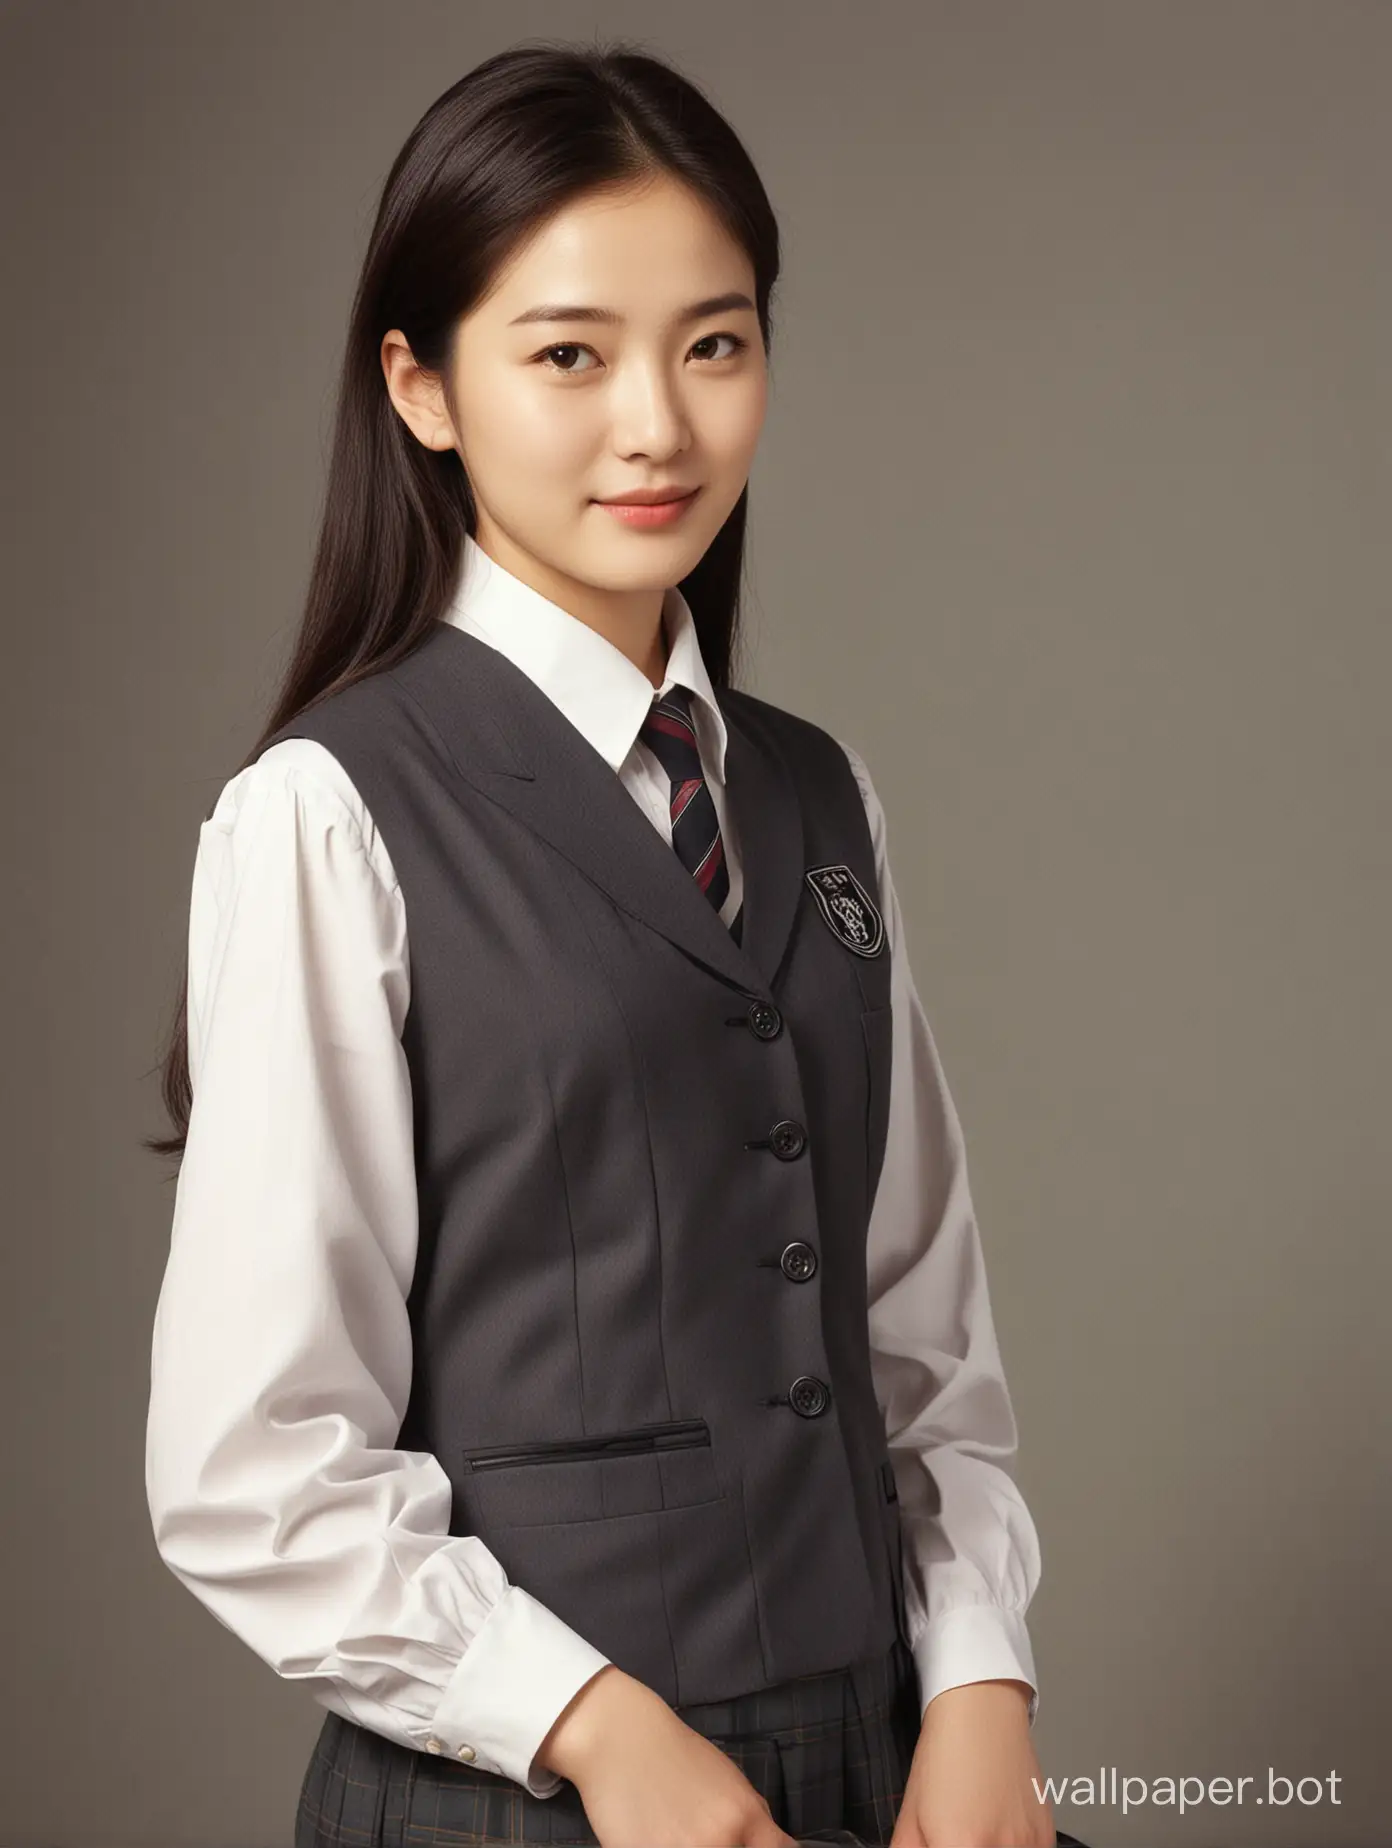 Son Hye Kyo at age 17 years old wear school uniform.